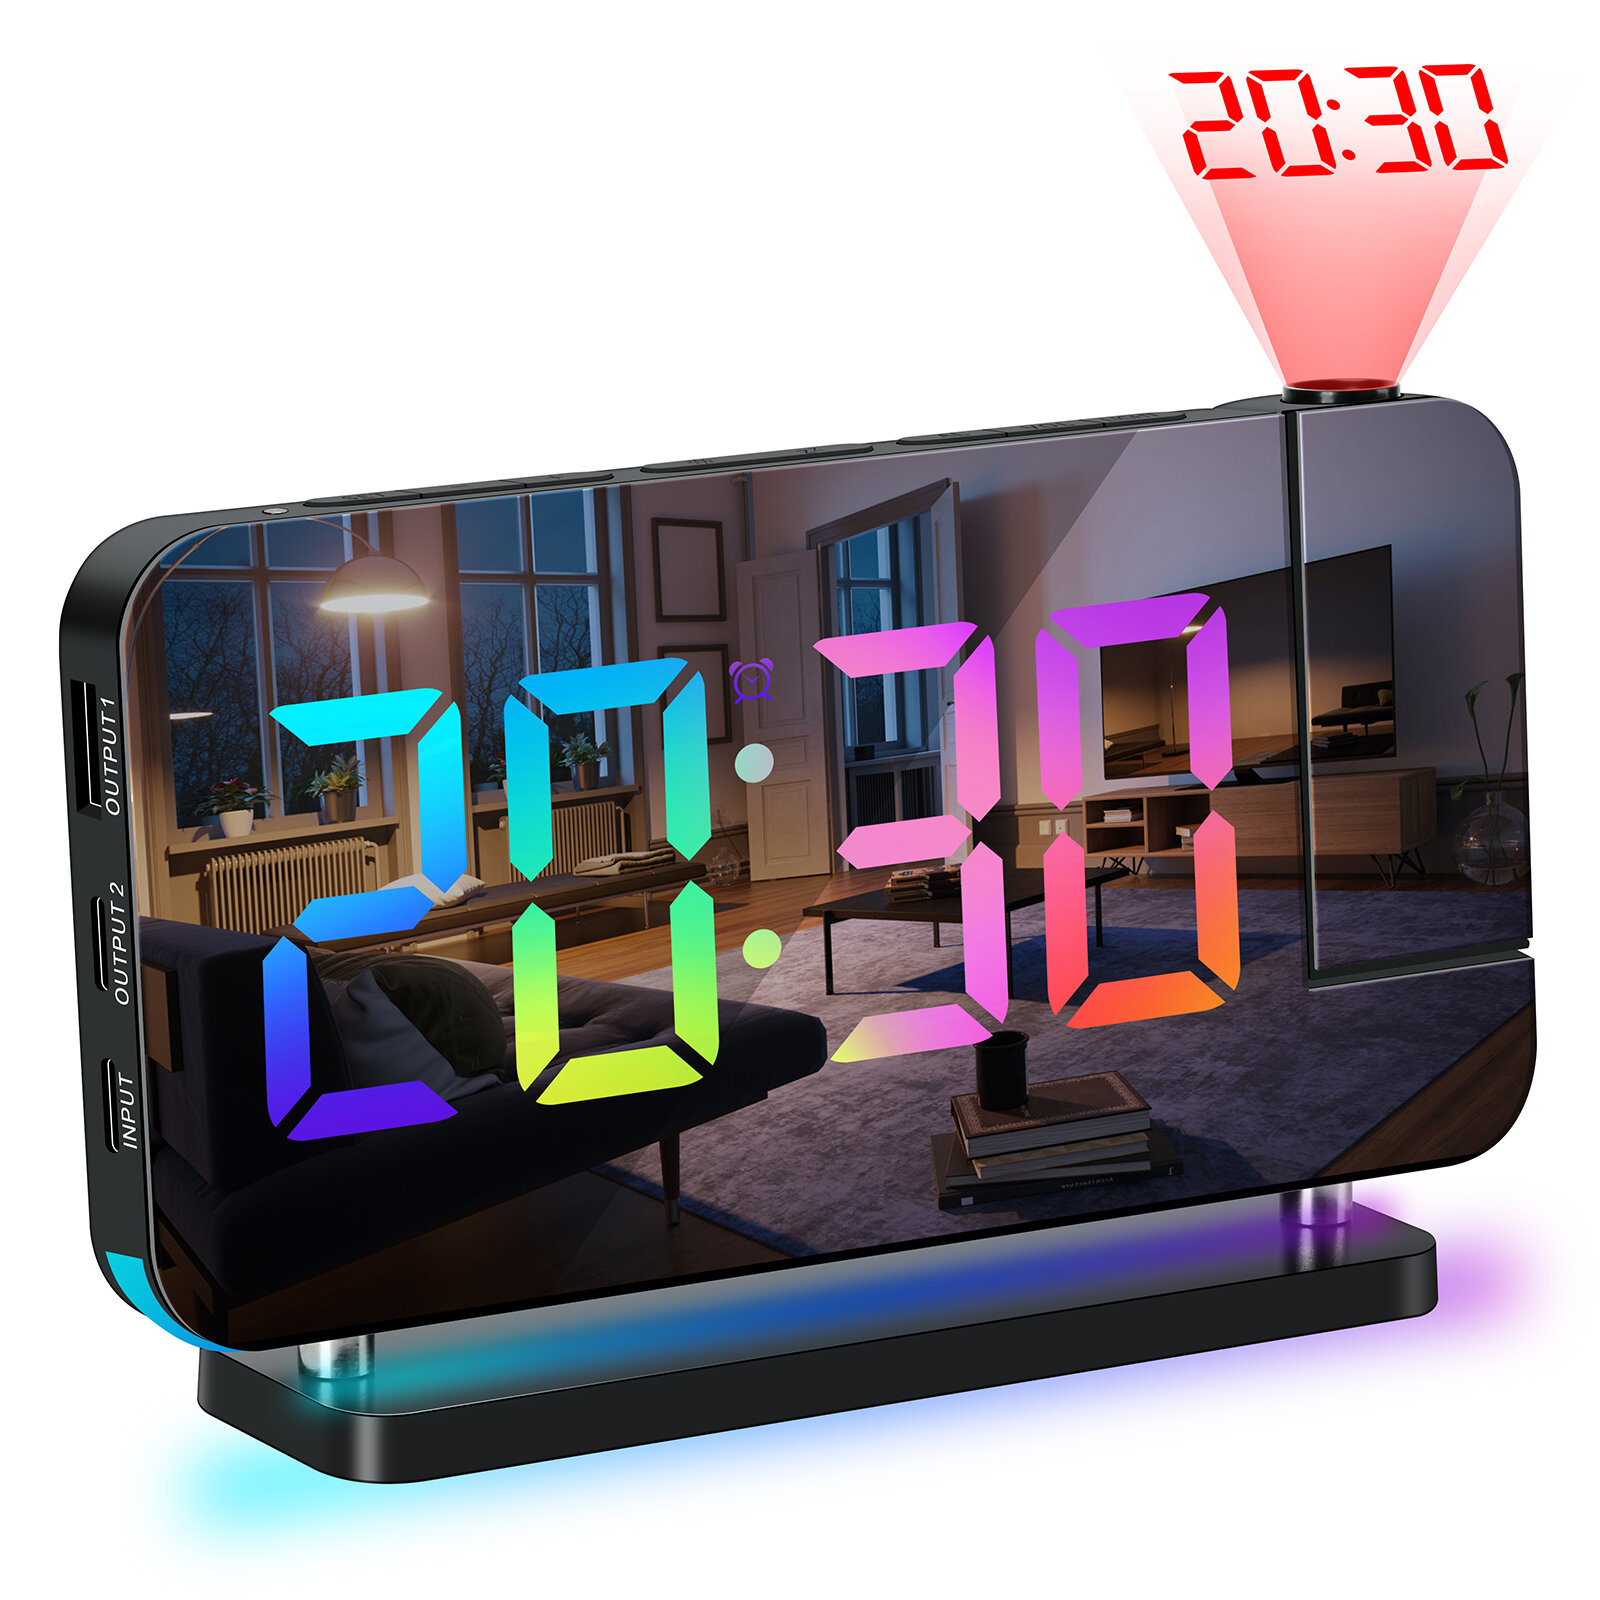 Zegar LED AGSIVO LED RGB za $14.99 / ~60zł